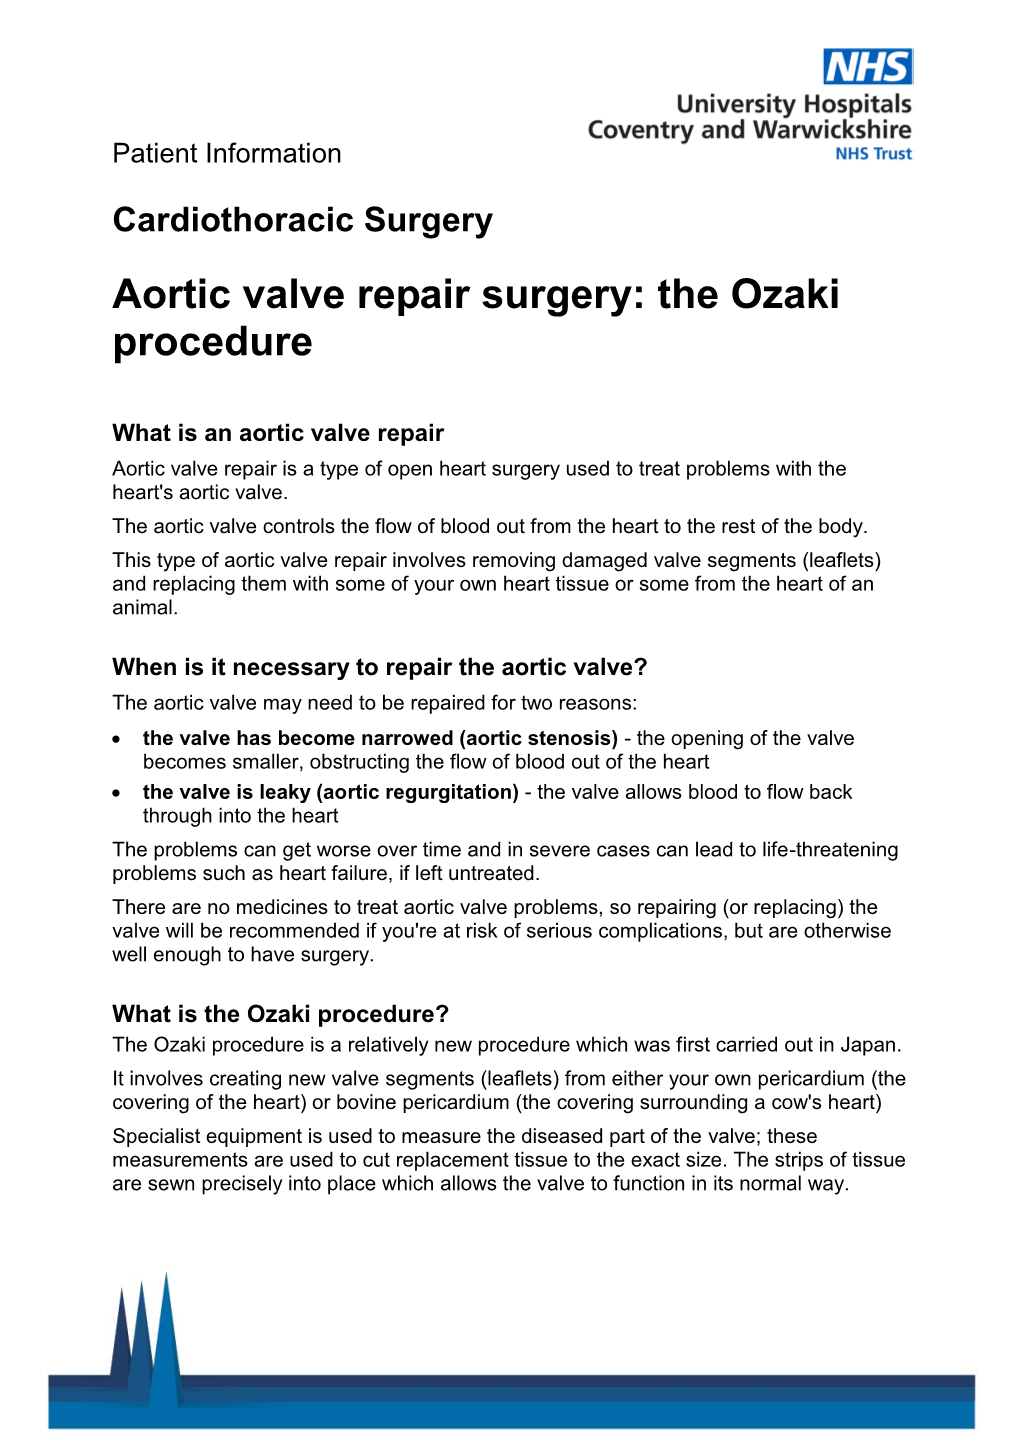 The Ozaki Procedure